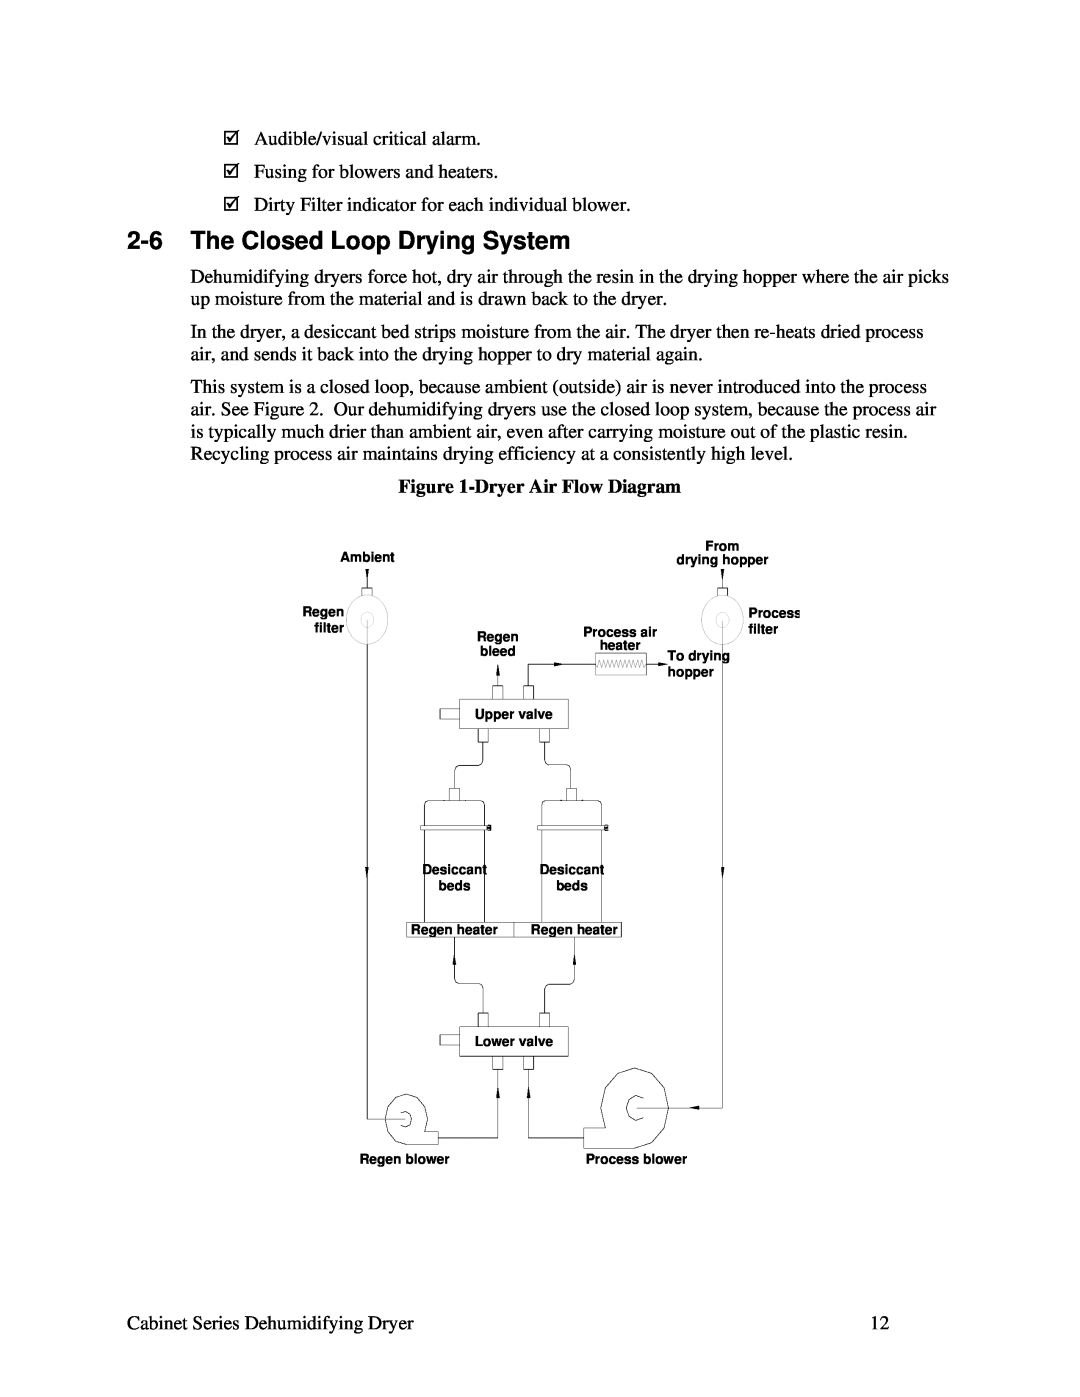 Sterling Plumbing 150, 225, 90, 100 installation manual 2-6The Closed Loop Drying System, DryerAir Flow Diagram 